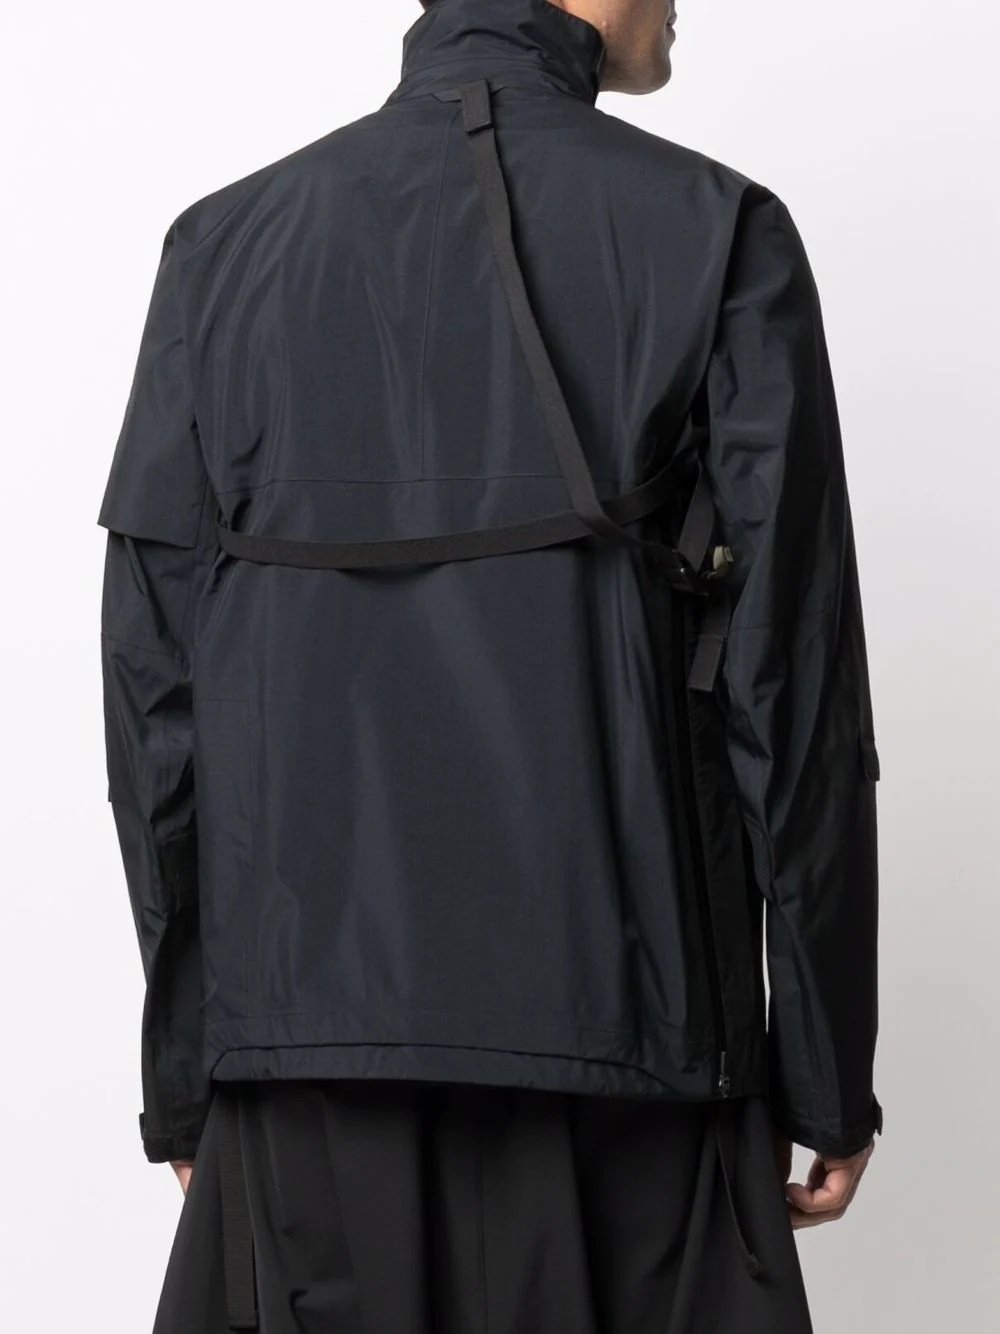 Paclite Plus Interops jacket - 4